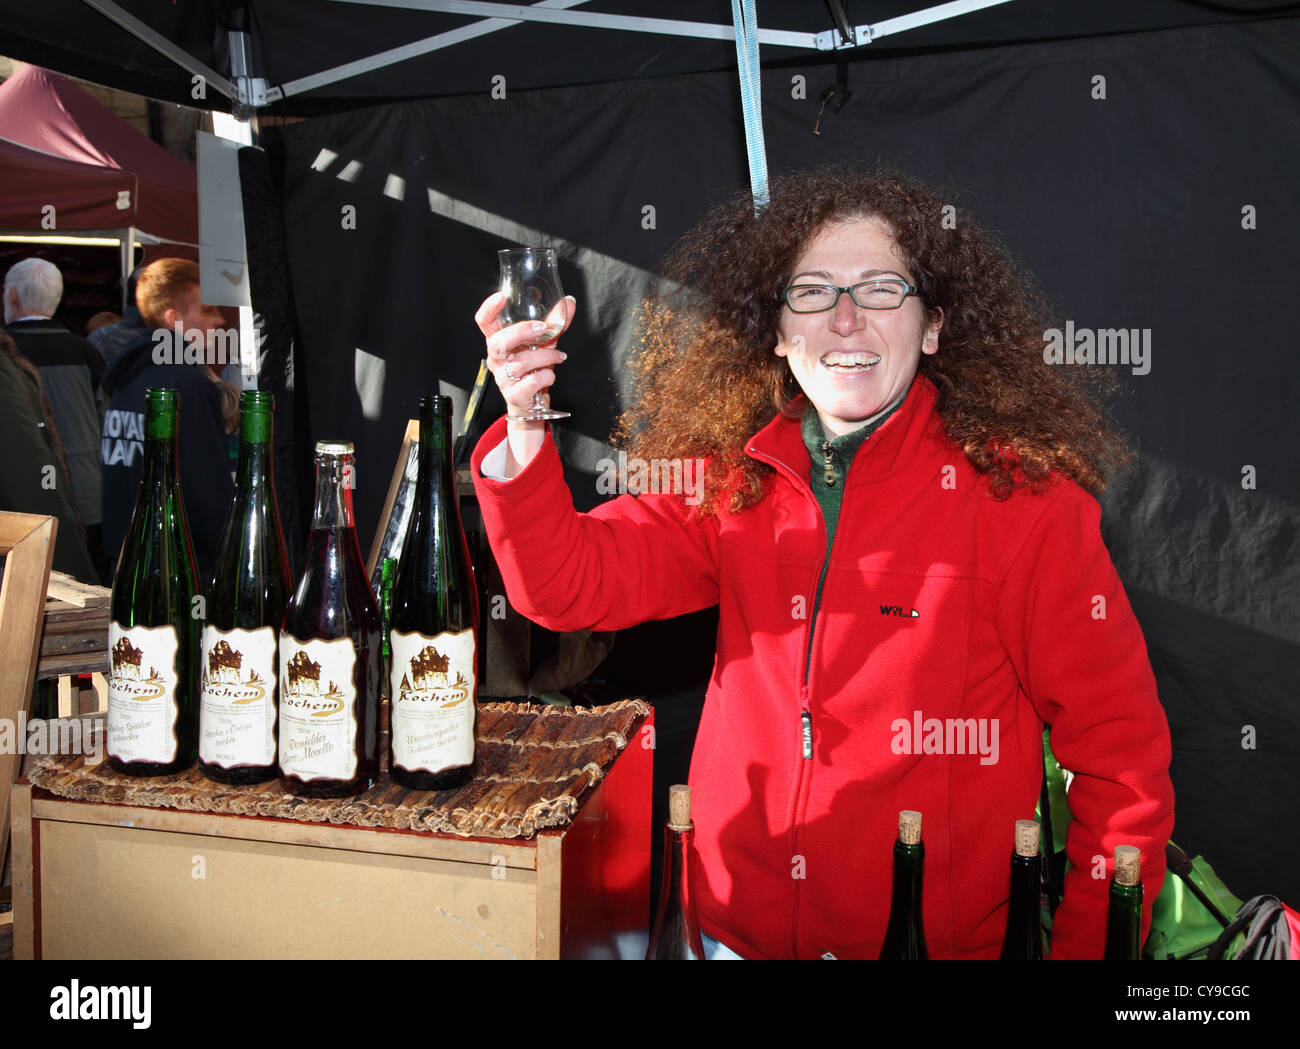 Woman holding wine glass Durham City food festival, north east England, UK Stock Photo